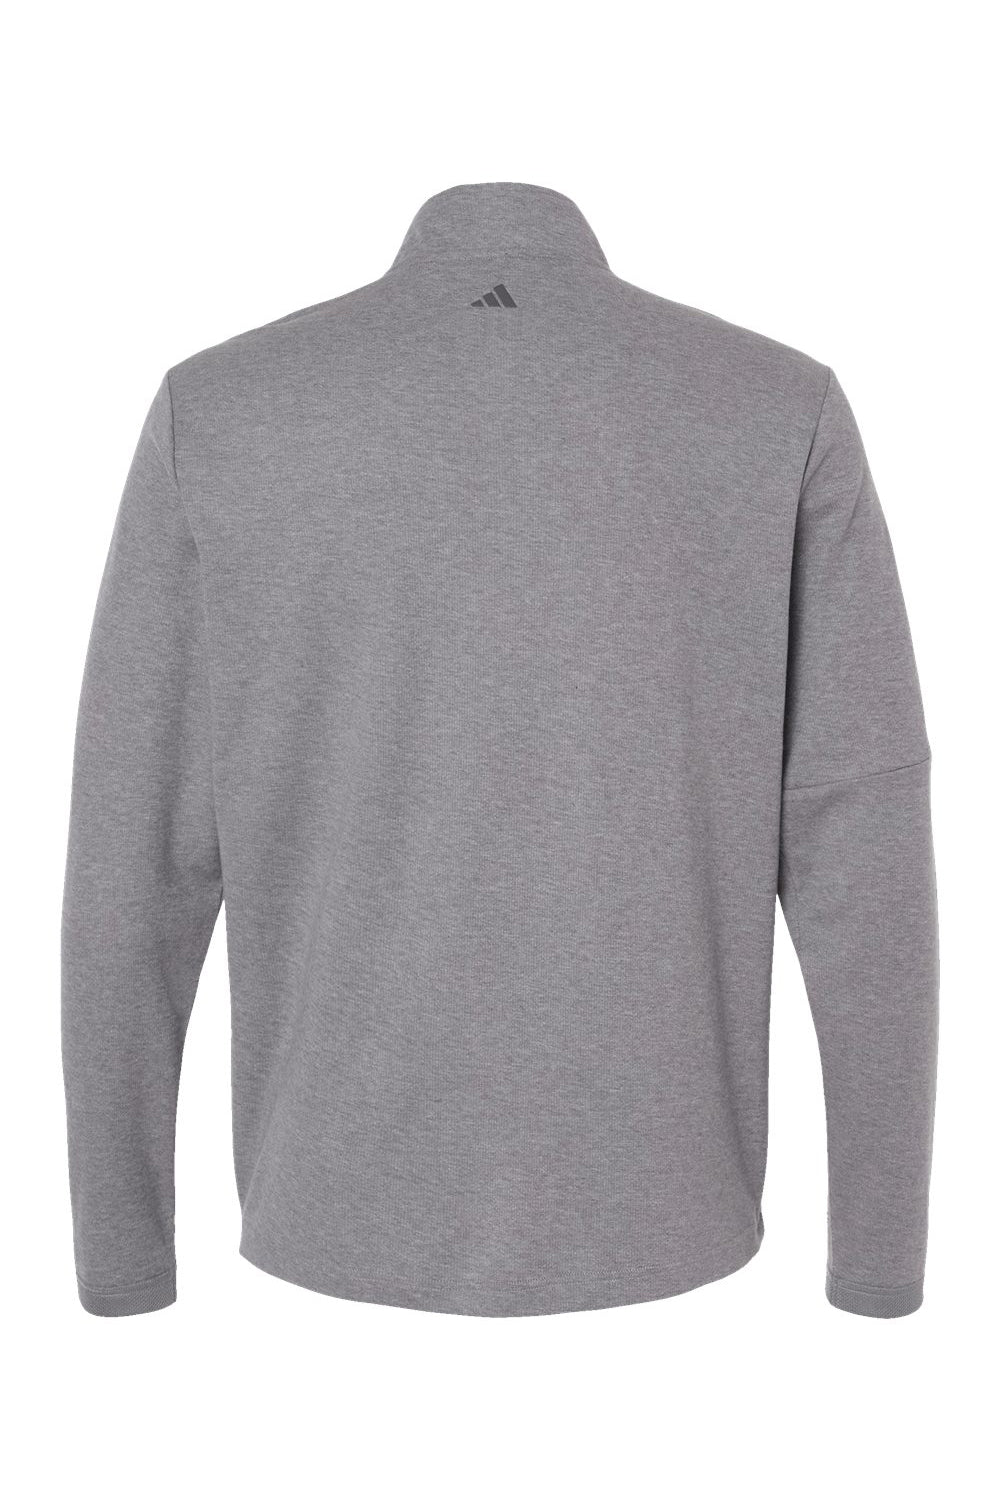 Adidas A554 Mens 3 Stripes Moisture Wicking 1/4 Zip Sweater Grey Melange Flat Back